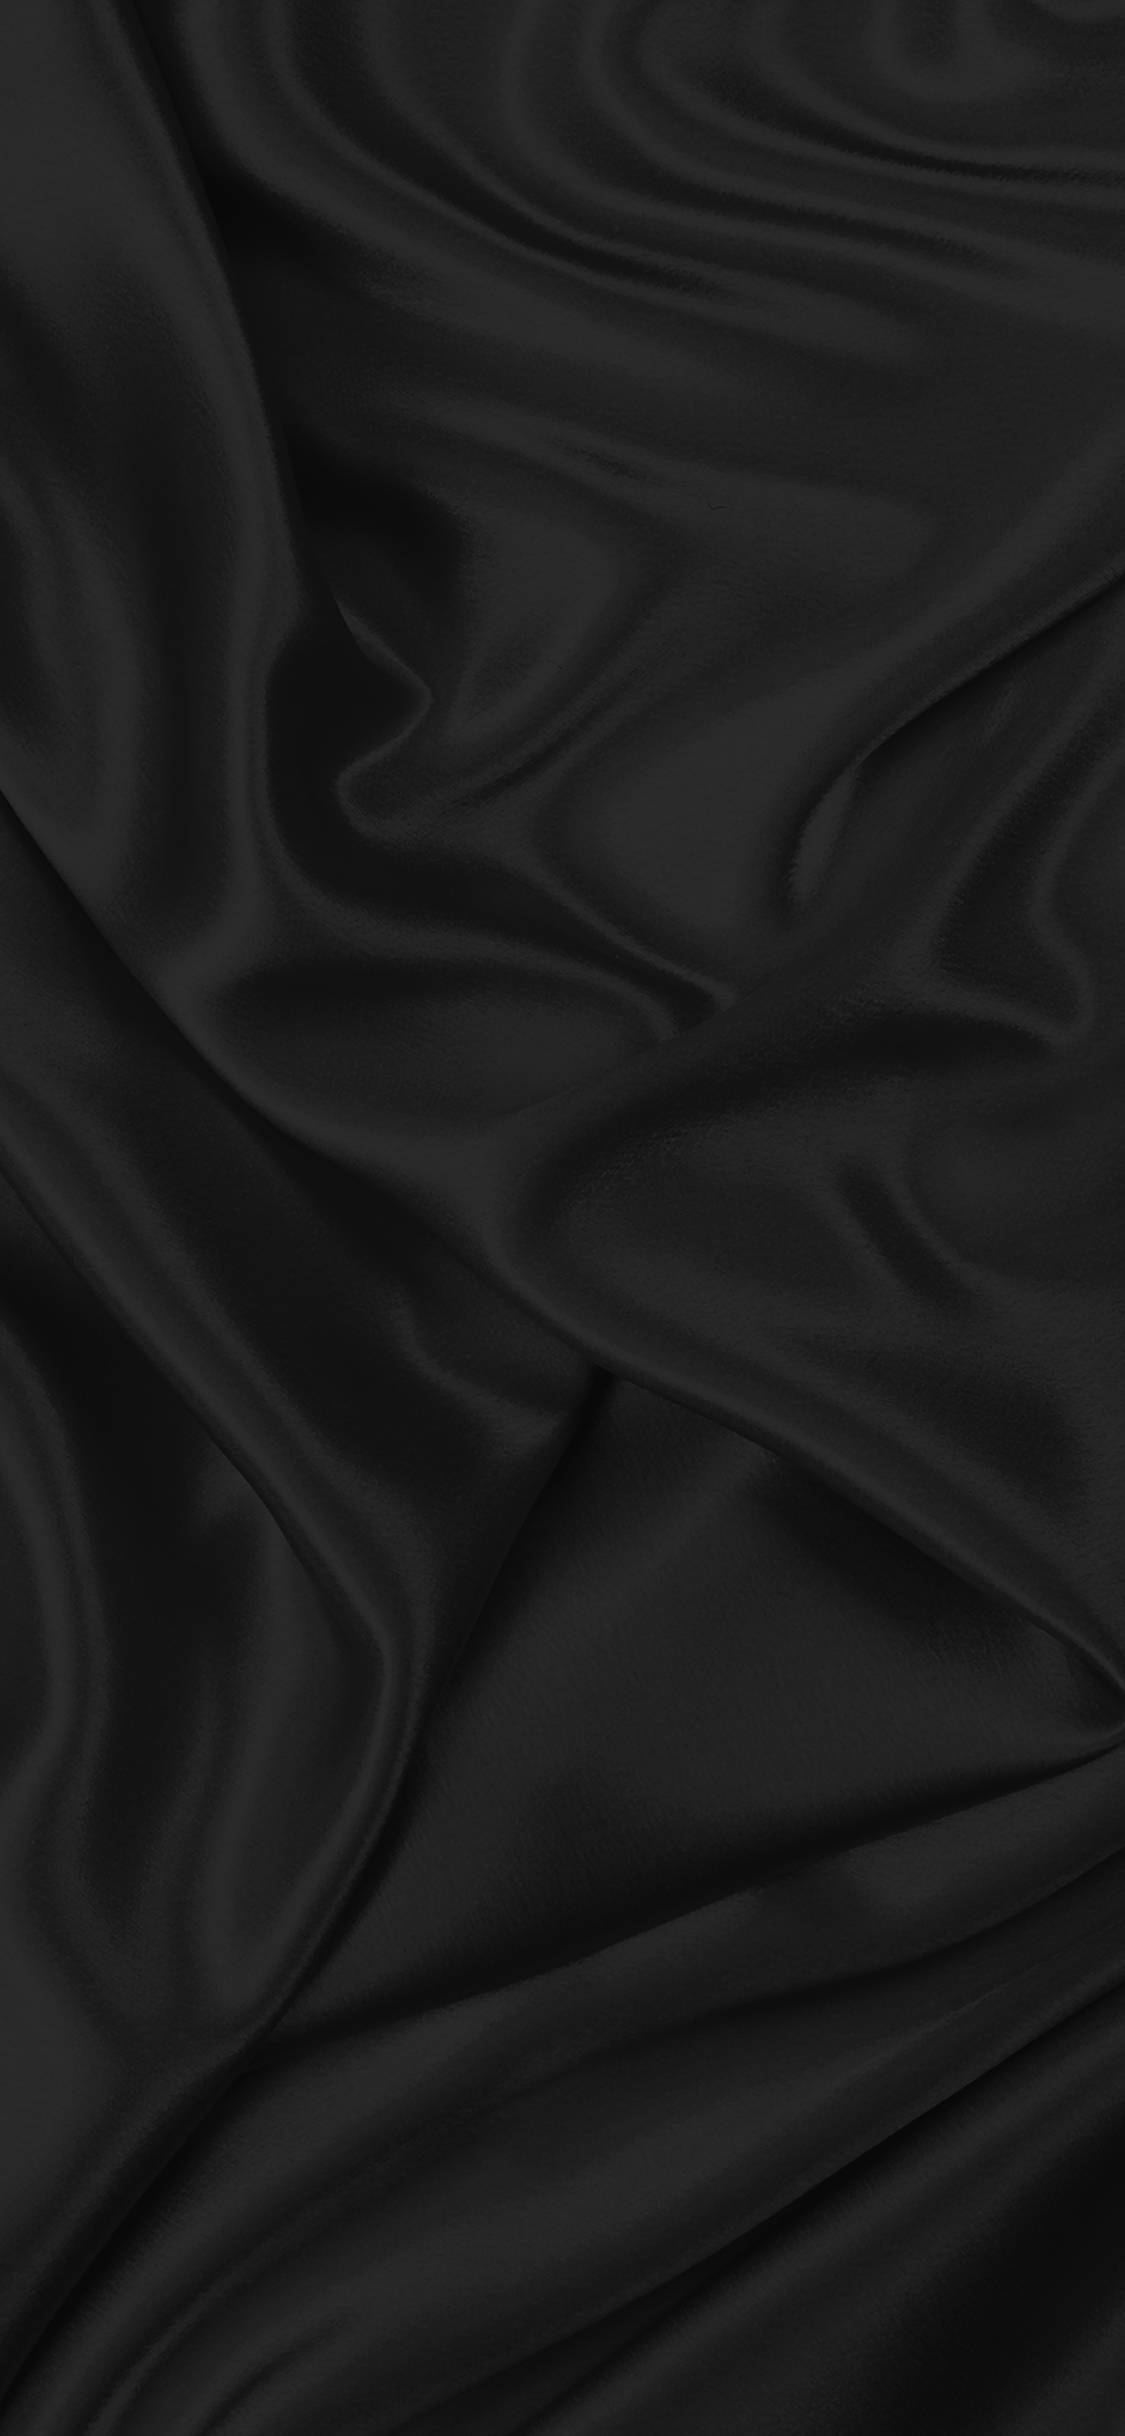 Plain Black Iphone Silk Cloth Picture